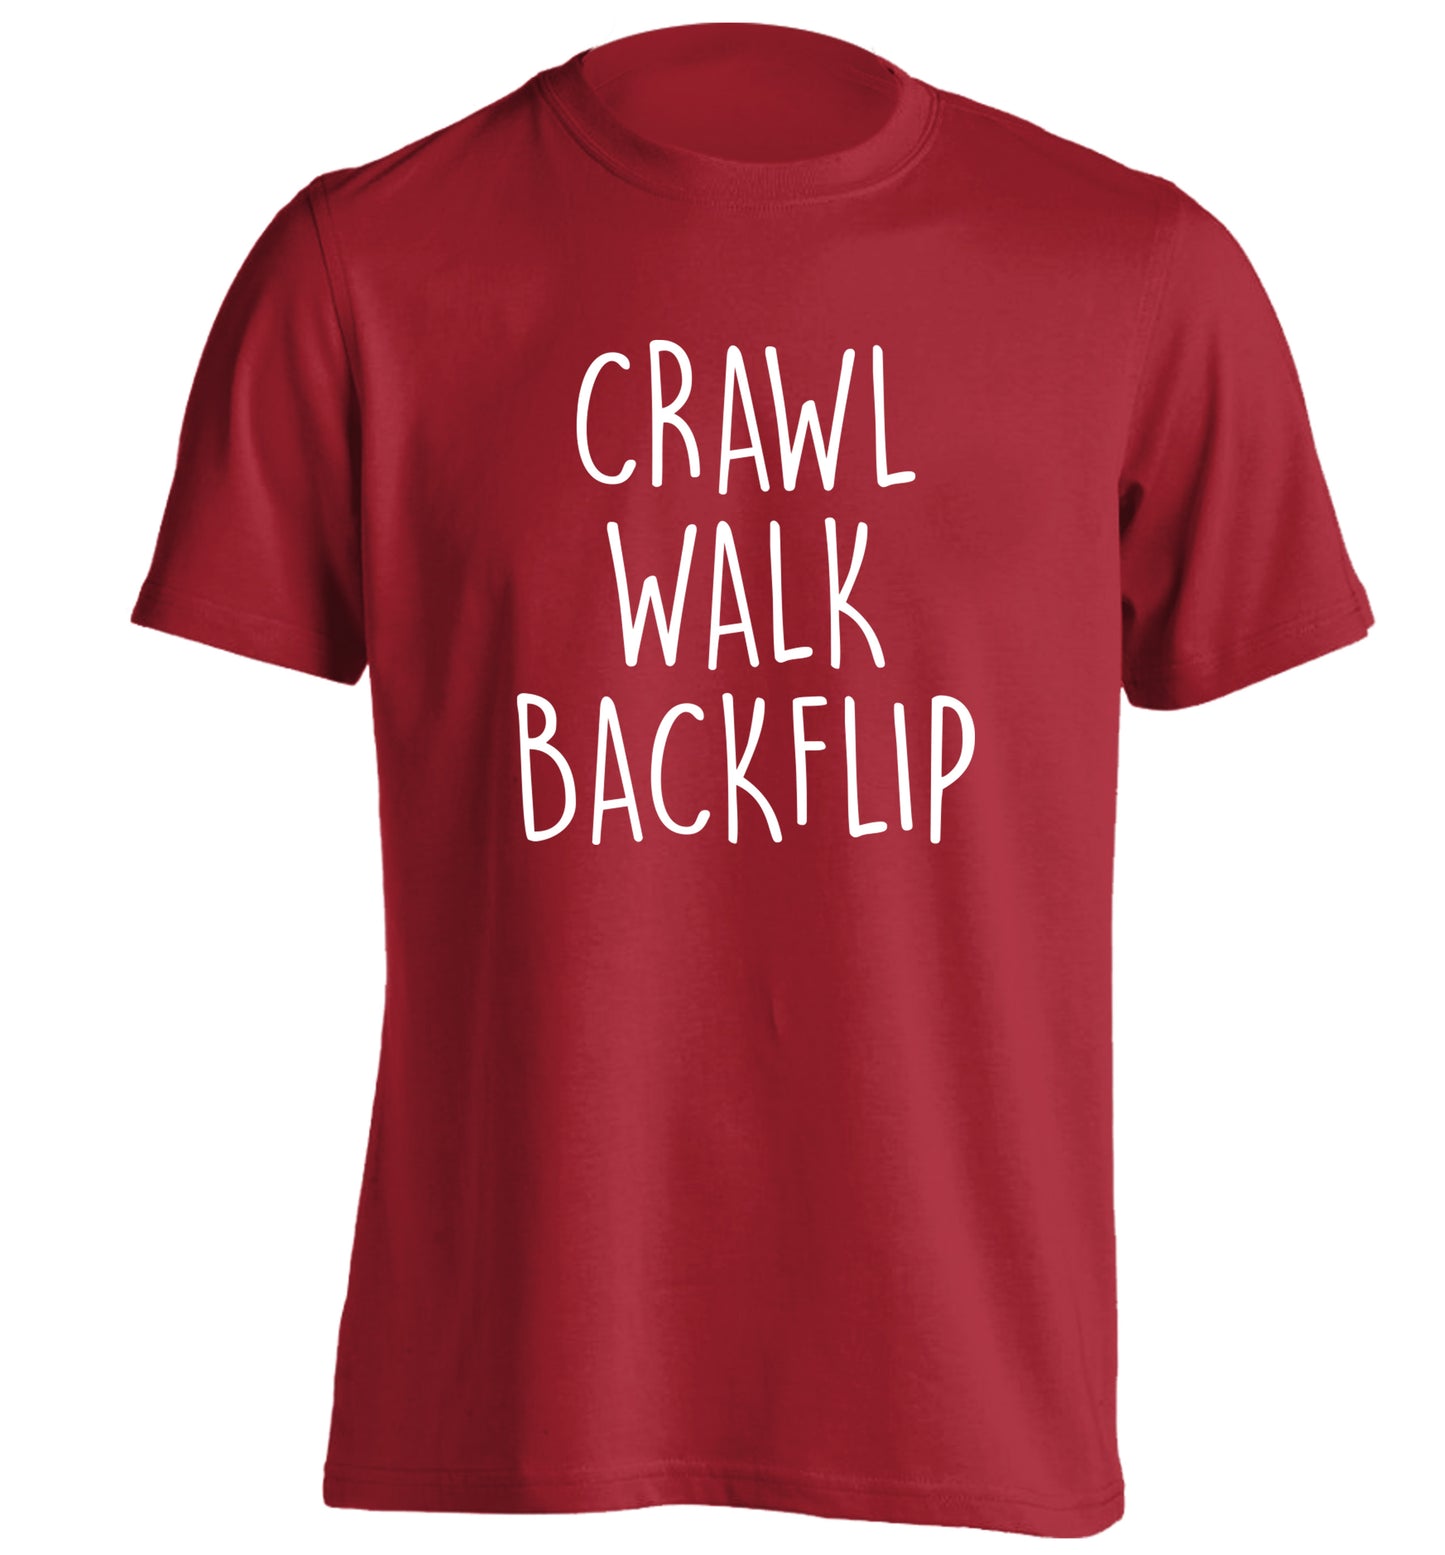 Crawl Walk Backflip adults unisex red Tshirt 2XL